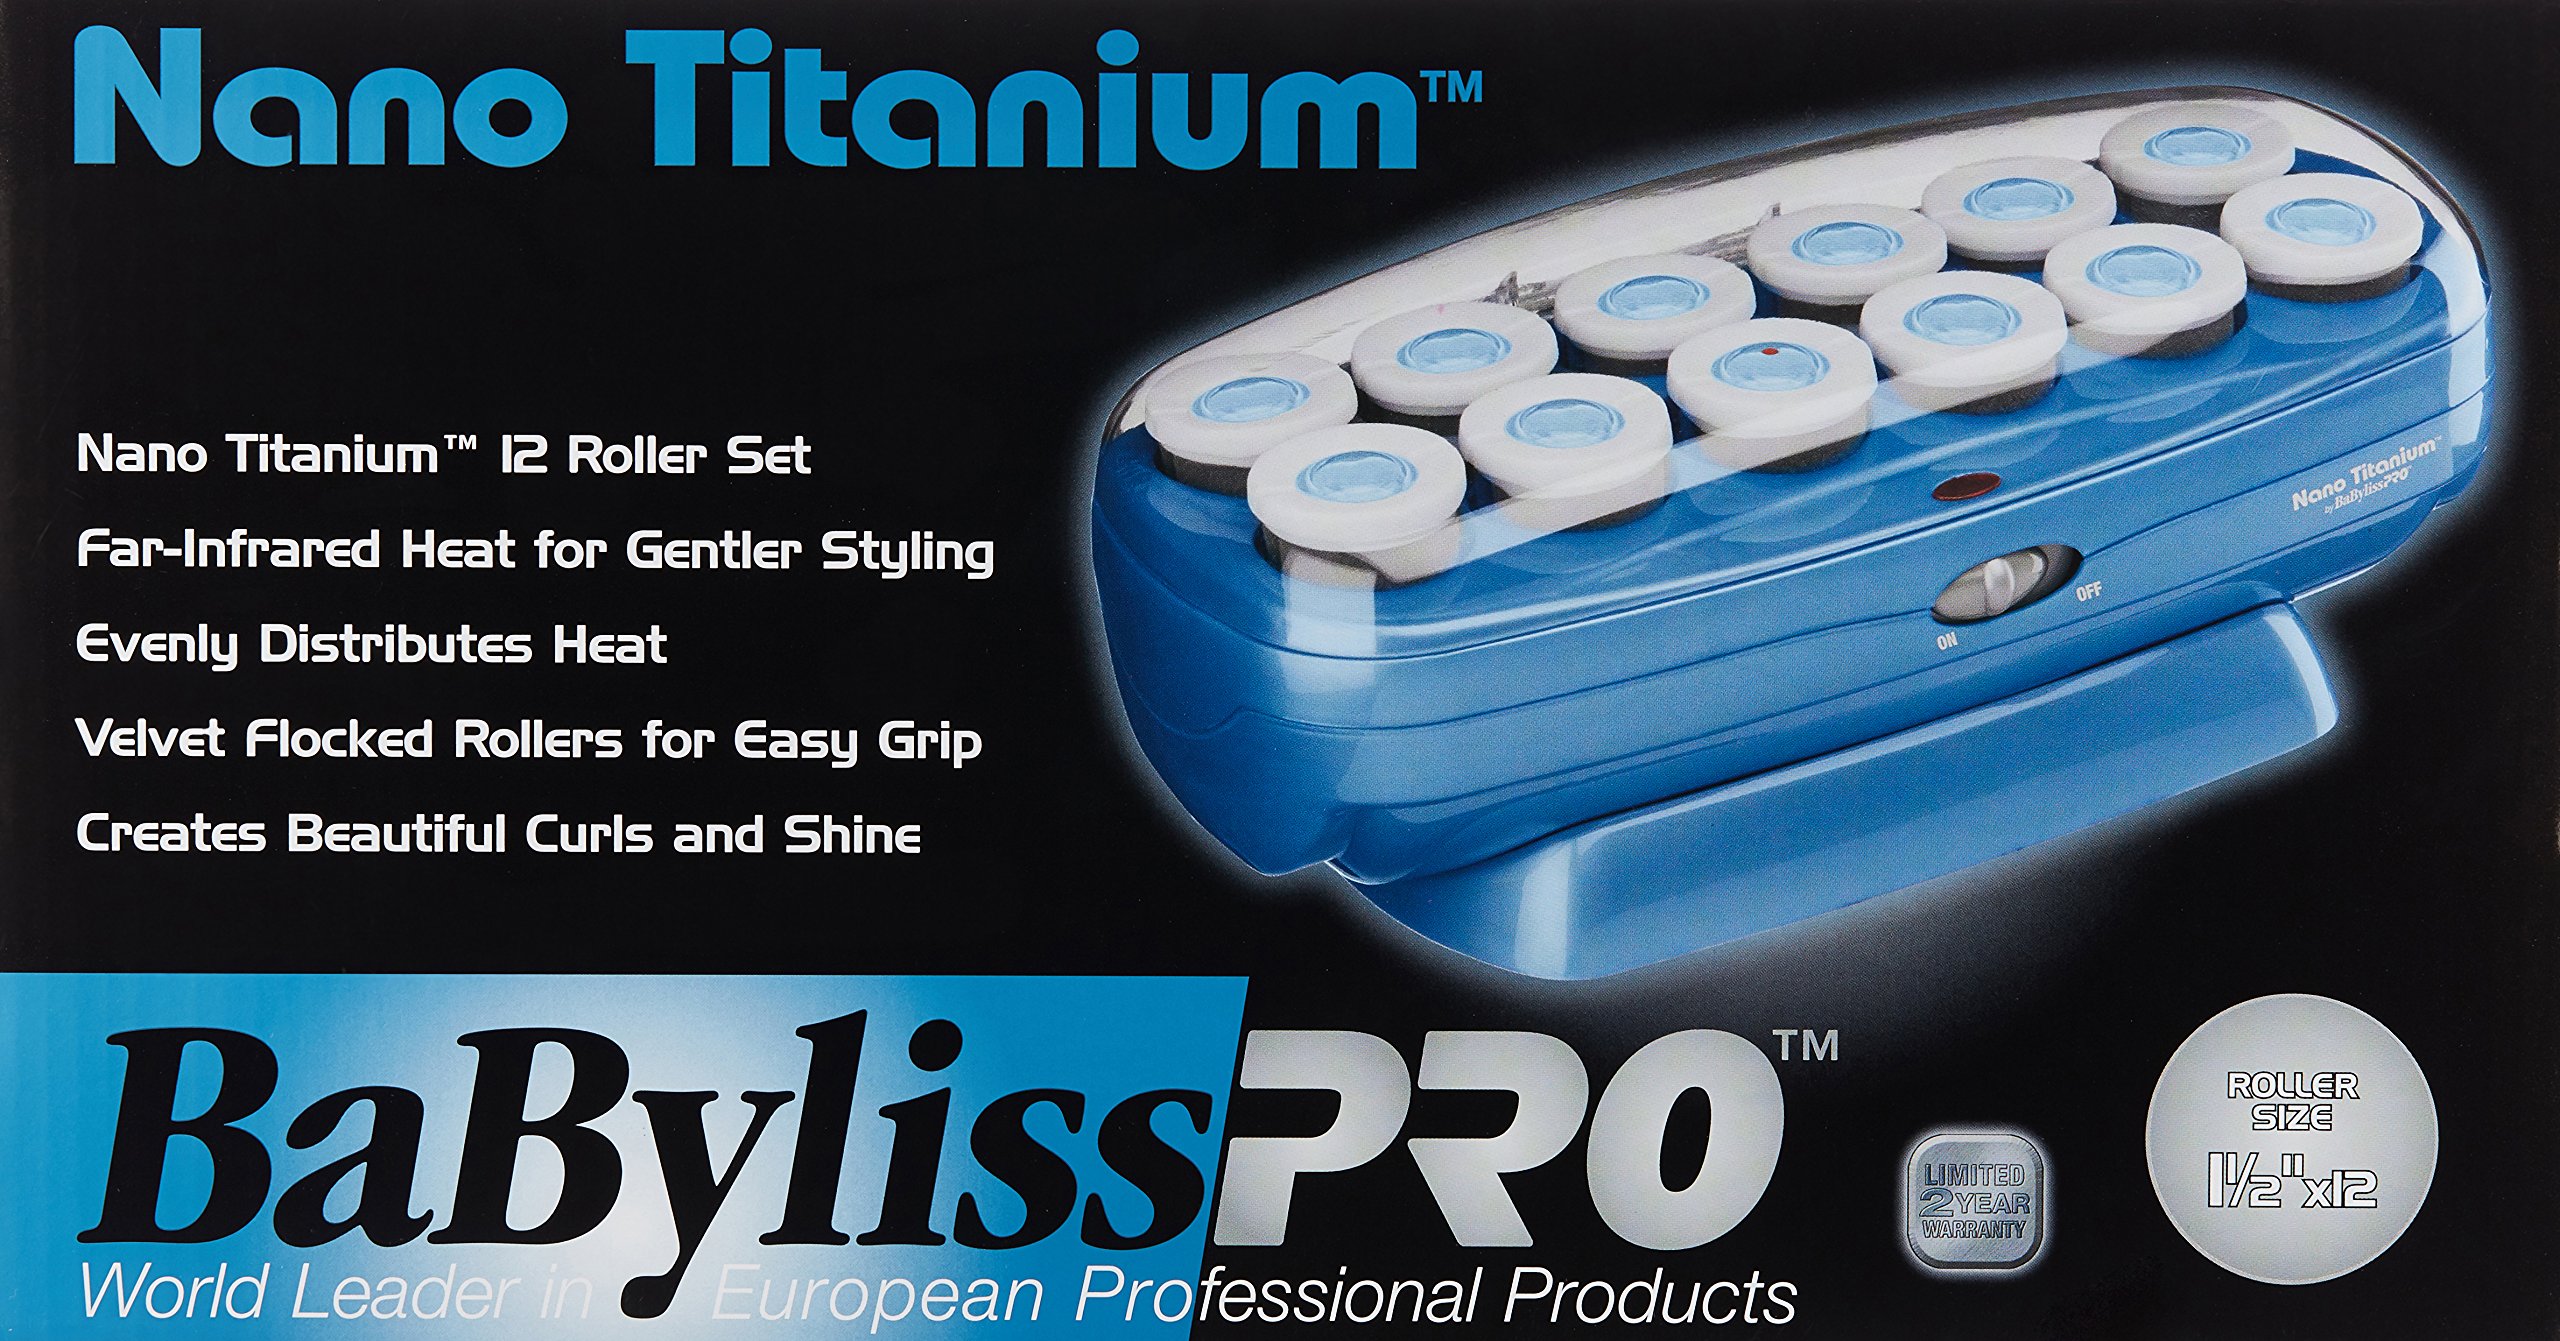 ($75 Value) BaBylissPRO Nano Titanium Ceramic Hair Rollers, Blue, 12 - image 2 of 9